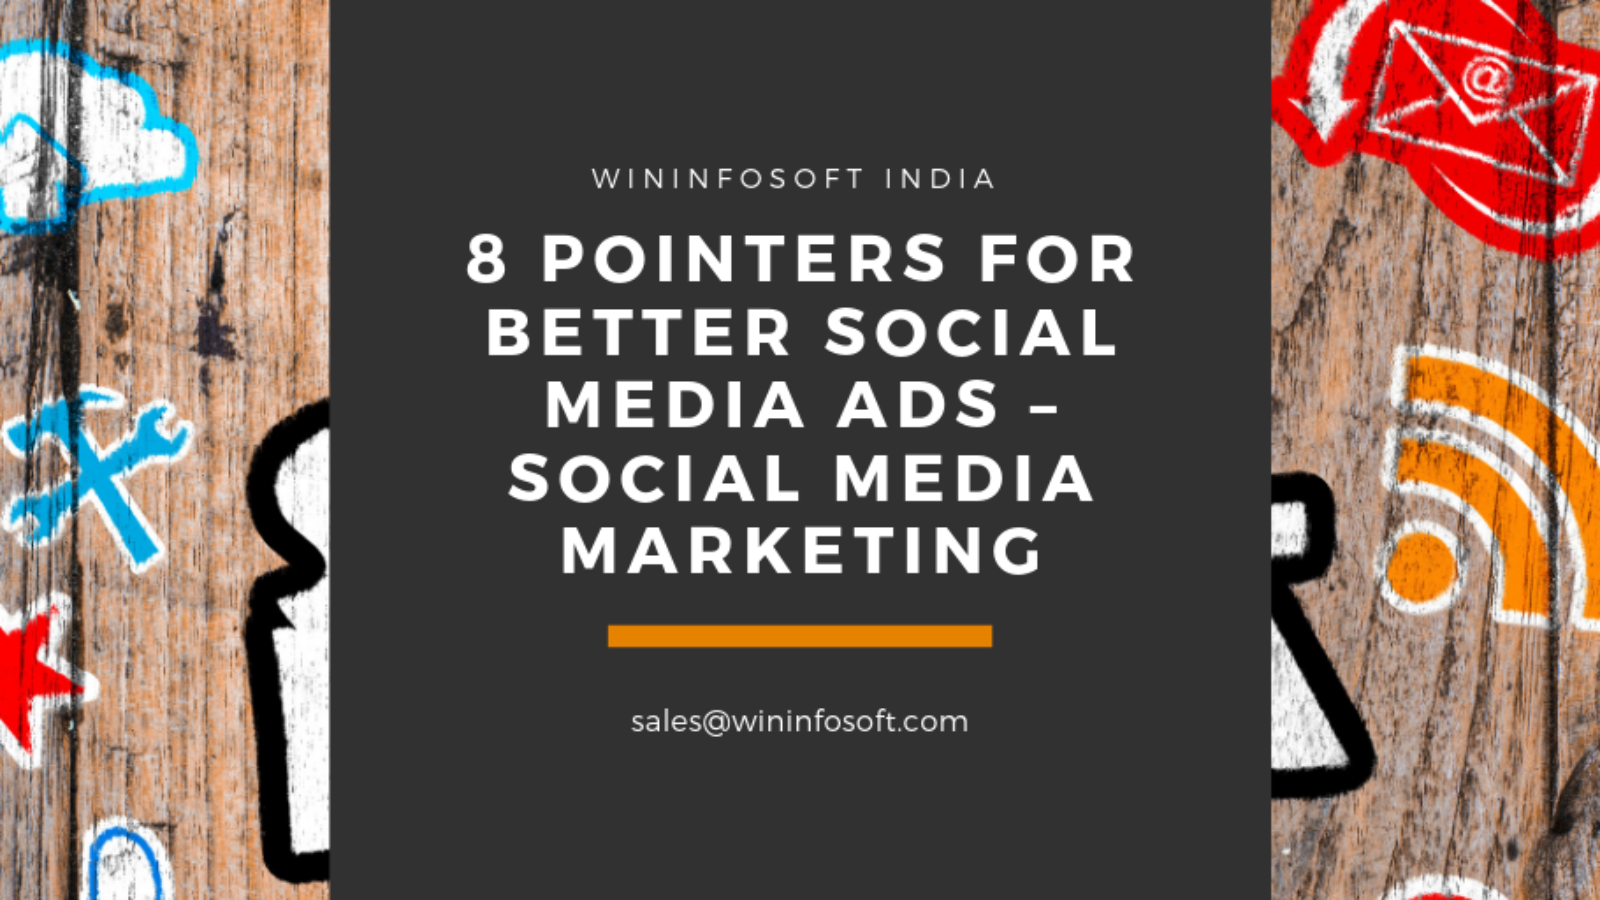 8 Pointers For Better Social Media Ads – Social Media Marketing